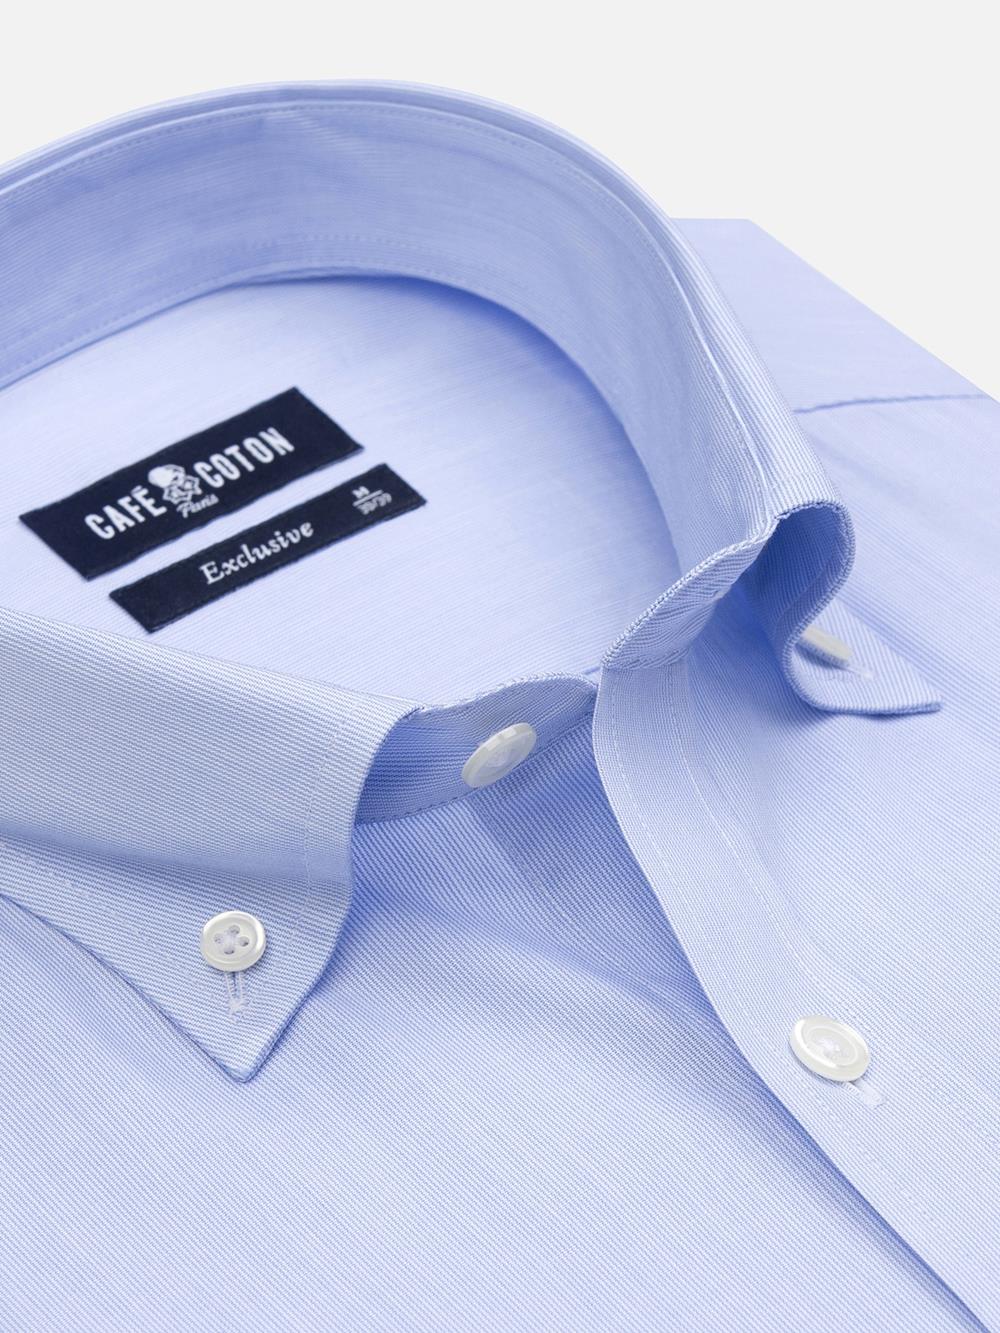 Thousand Stripes Sky Shirt - Button down collar